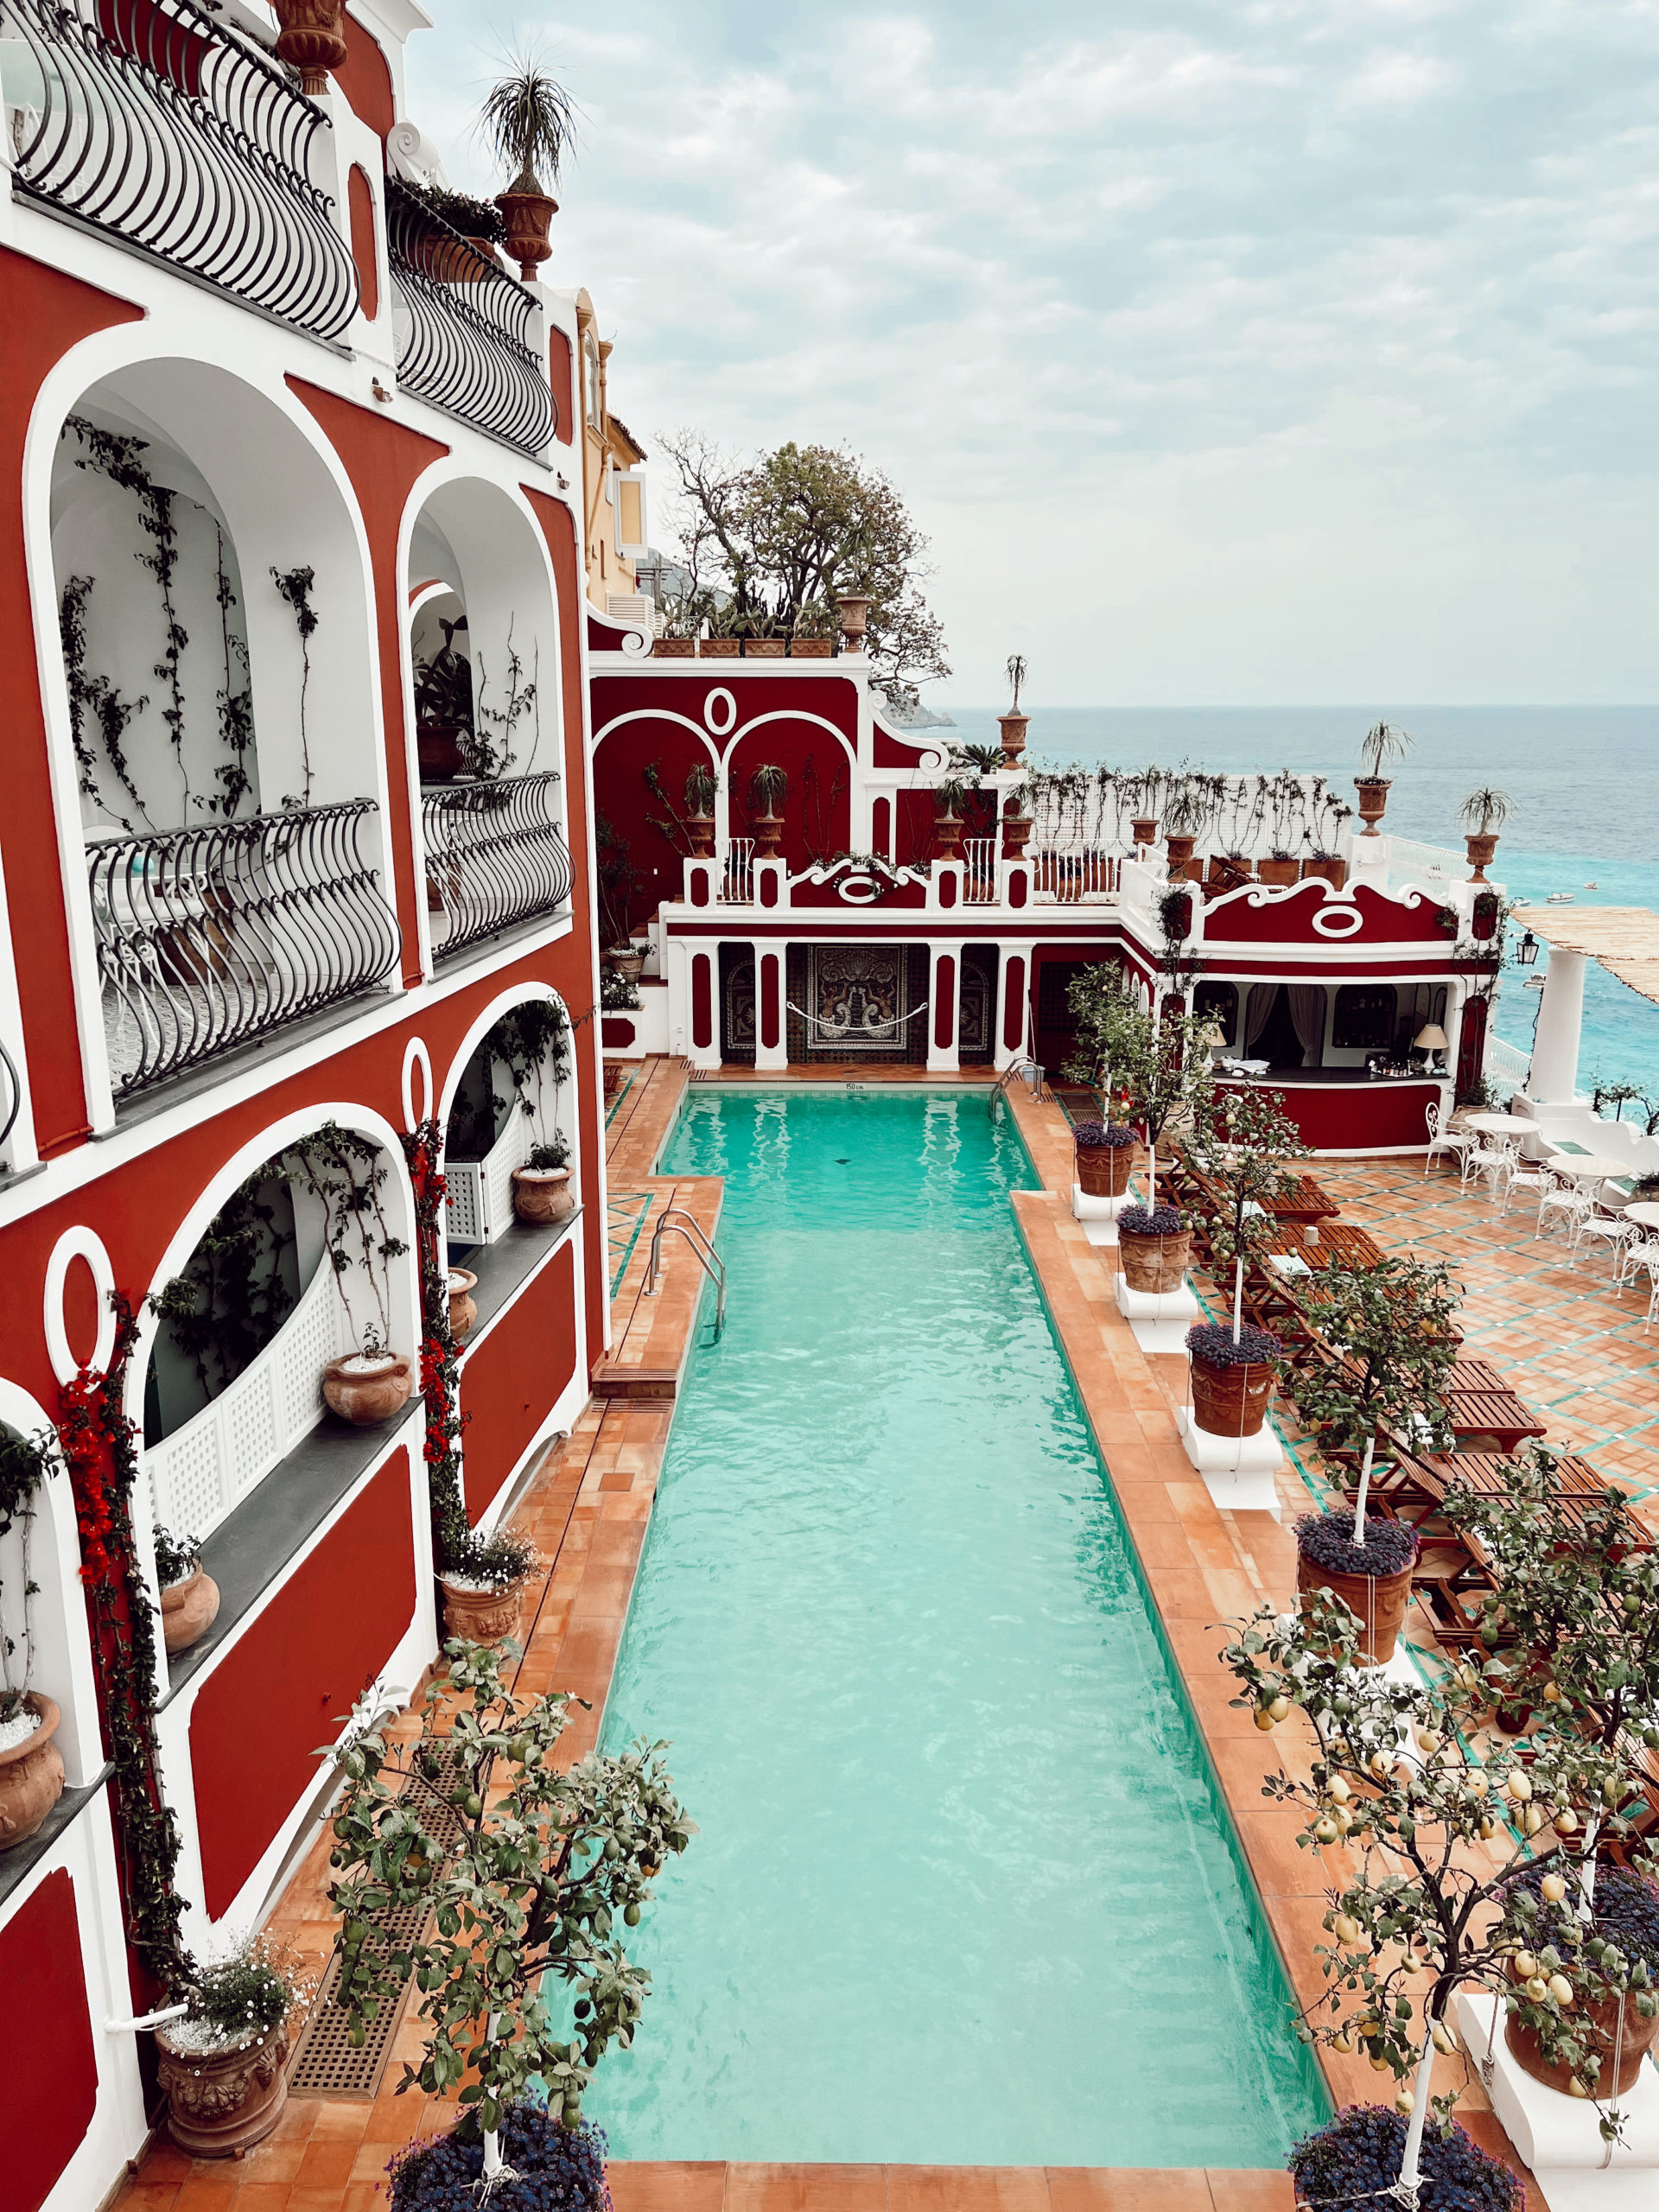 Le Sirenuse Hotel pool in Positano on the Amalfi Coast